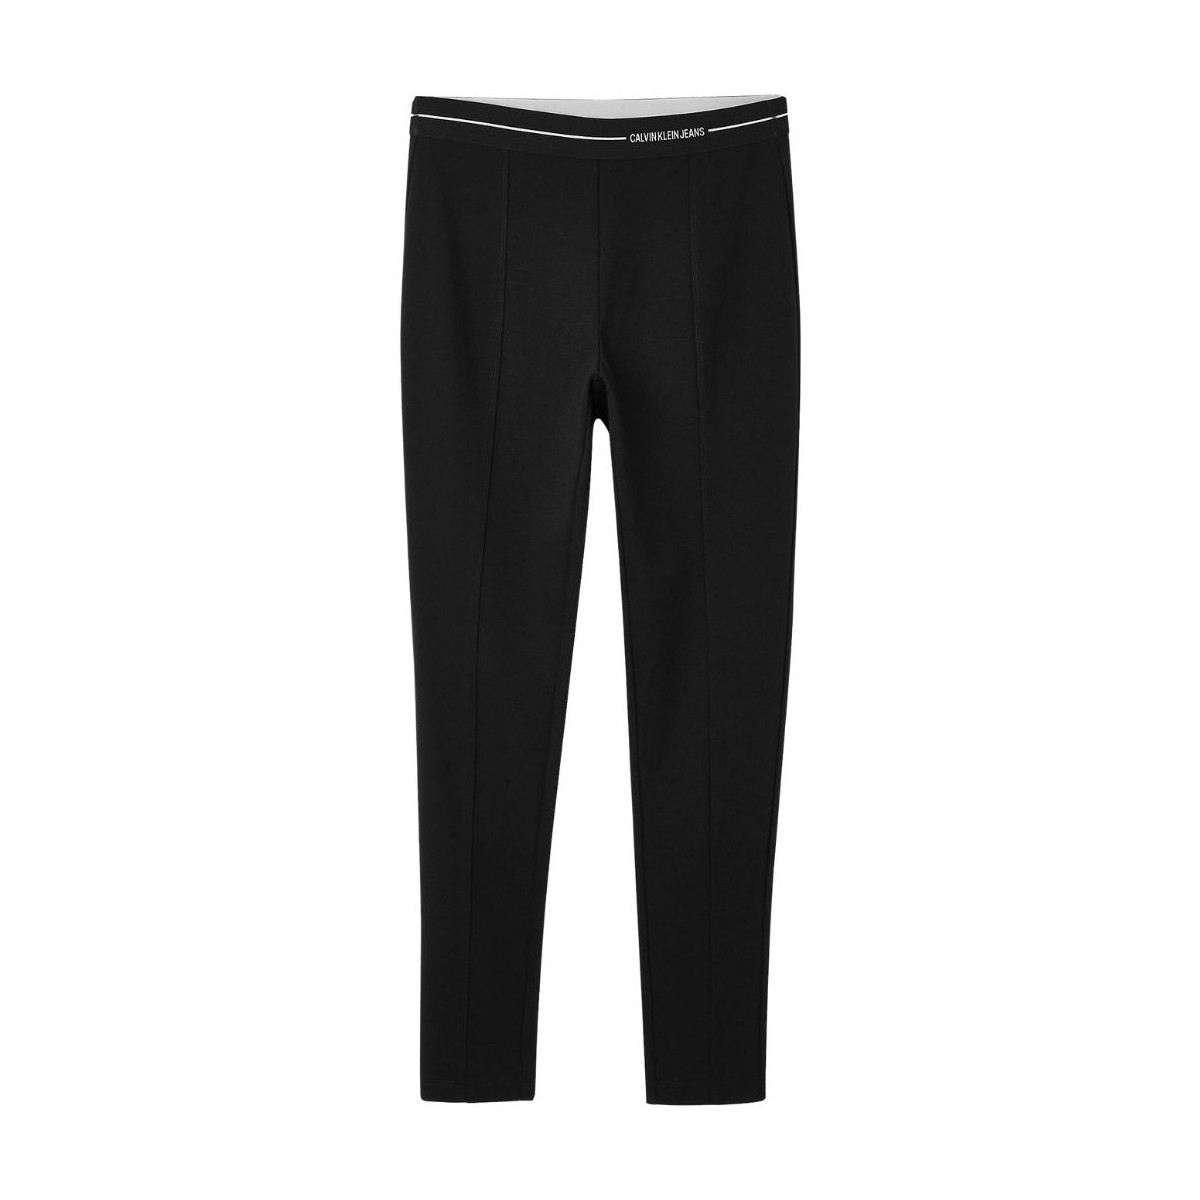 Vêtements Femme Maillots / Shorts de bain Calvin Klein Jeans Legging sport Calvin Klein ref 53530 BEH noir Noir